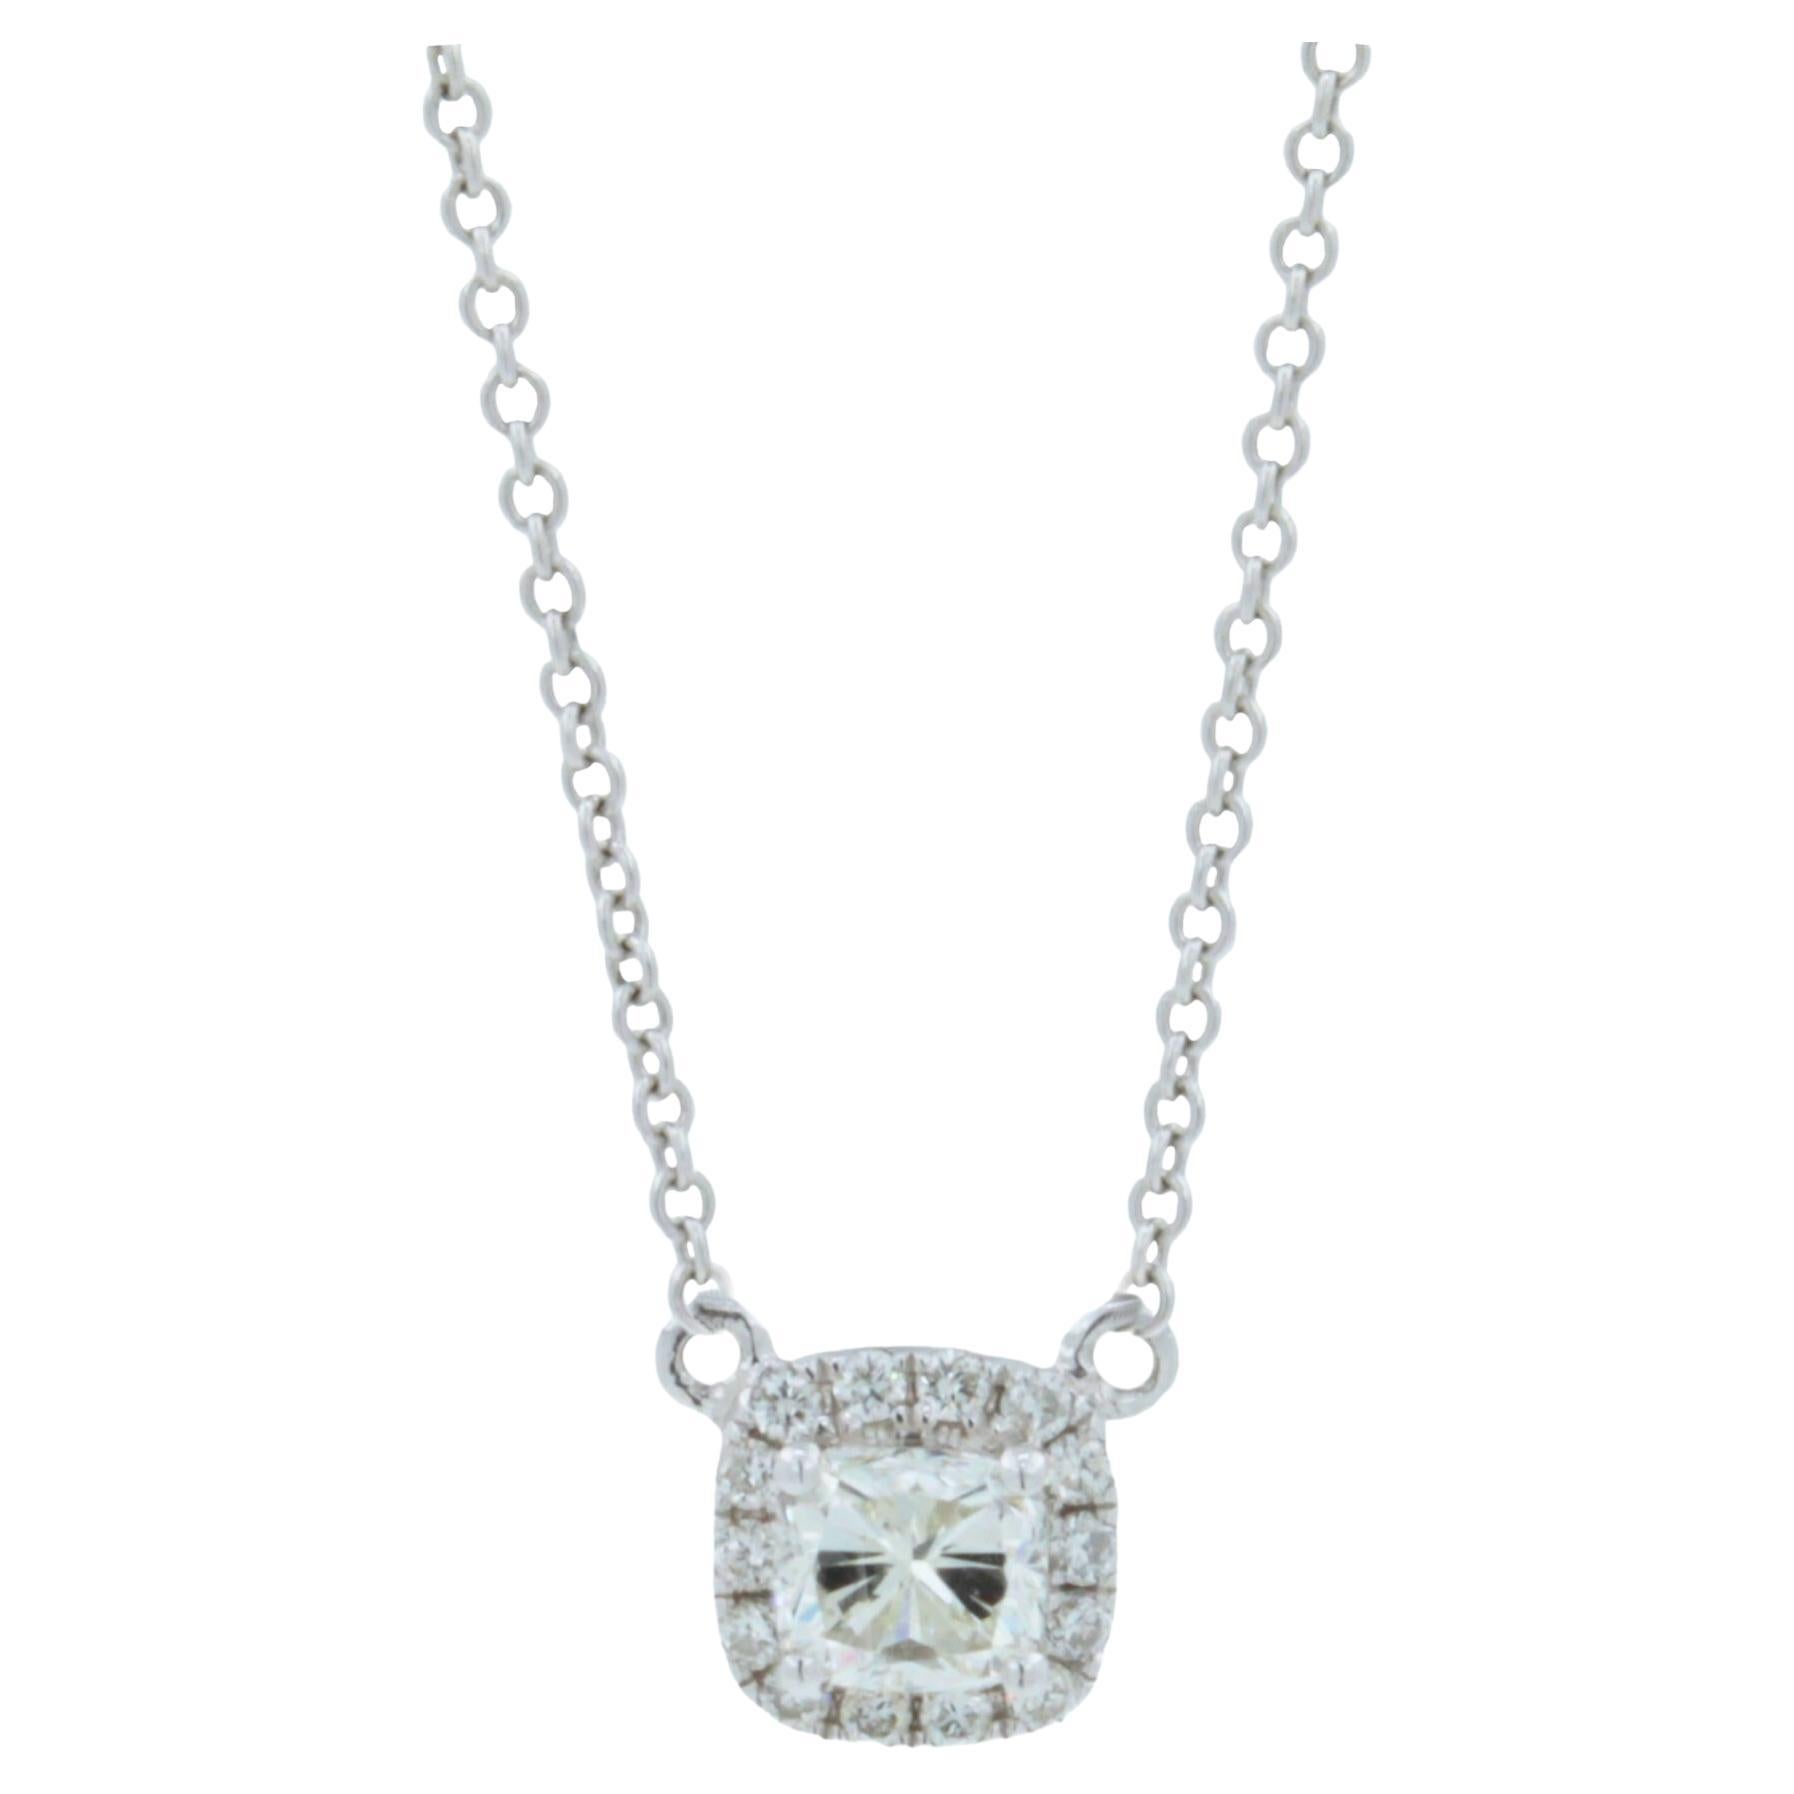 Halo Pave Cushion Cut Diamond Pendant 18 Karat White Gold Necklace Chain Charm